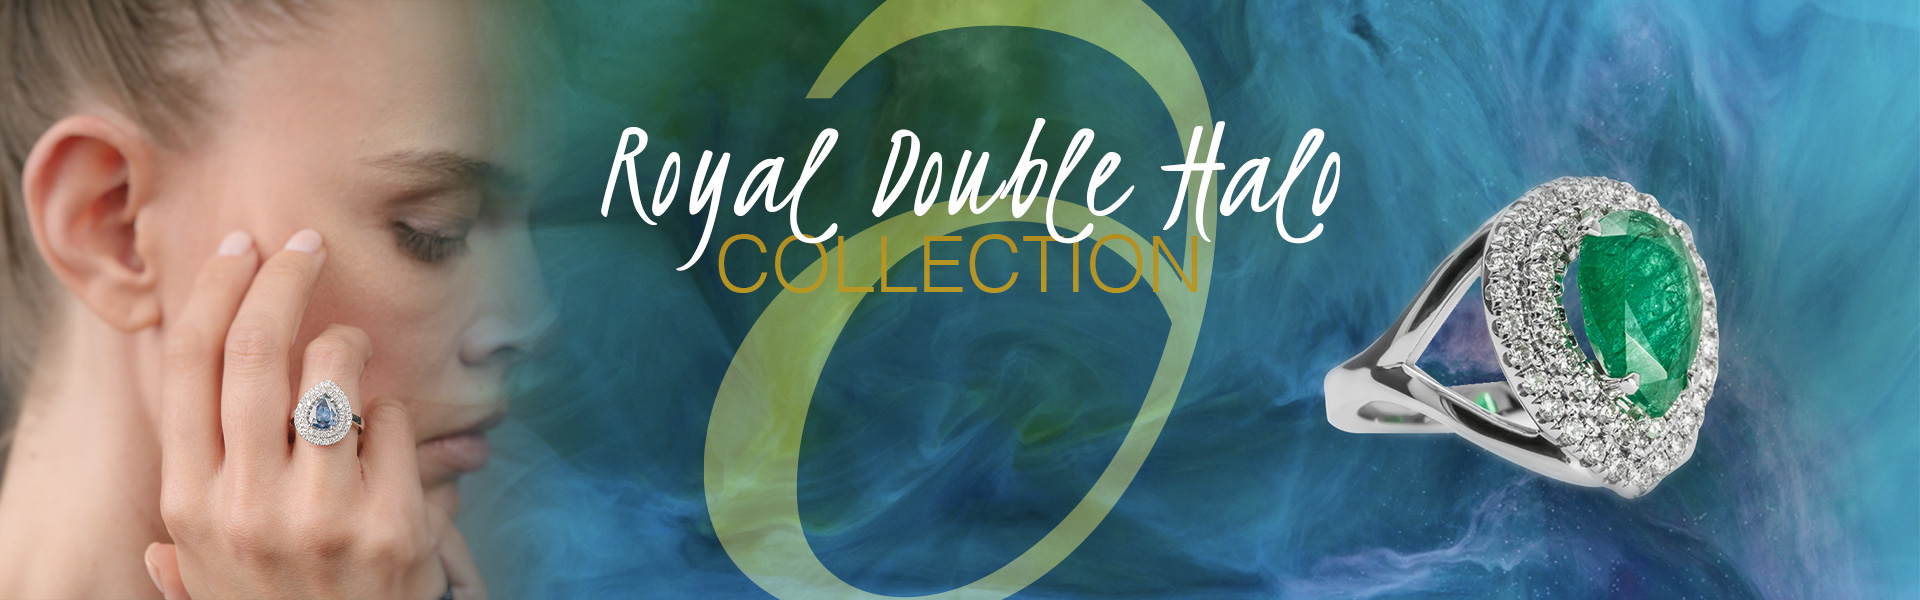 Royal Double Hallo Collection